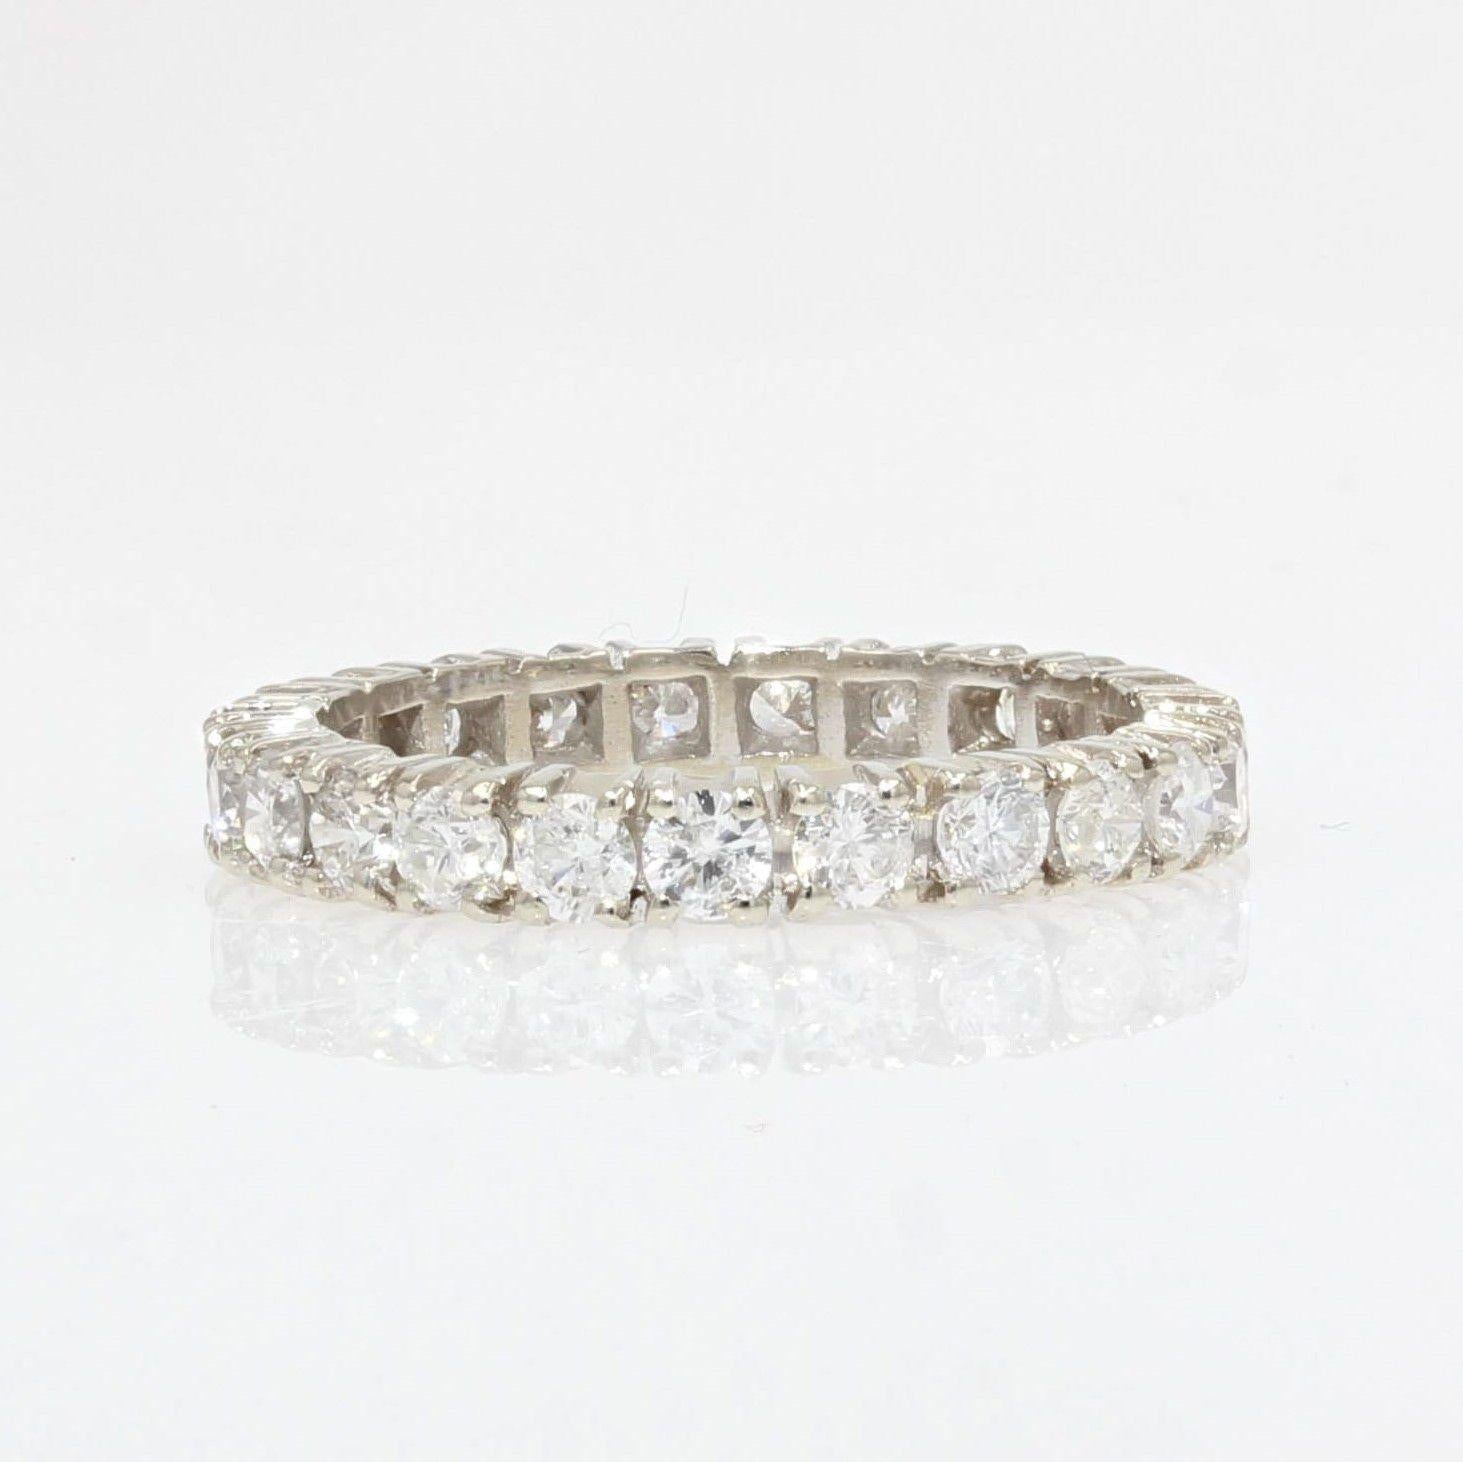 French Modern Diamonds 18 Karat White Gold Band Wedding Ring For Sale 4